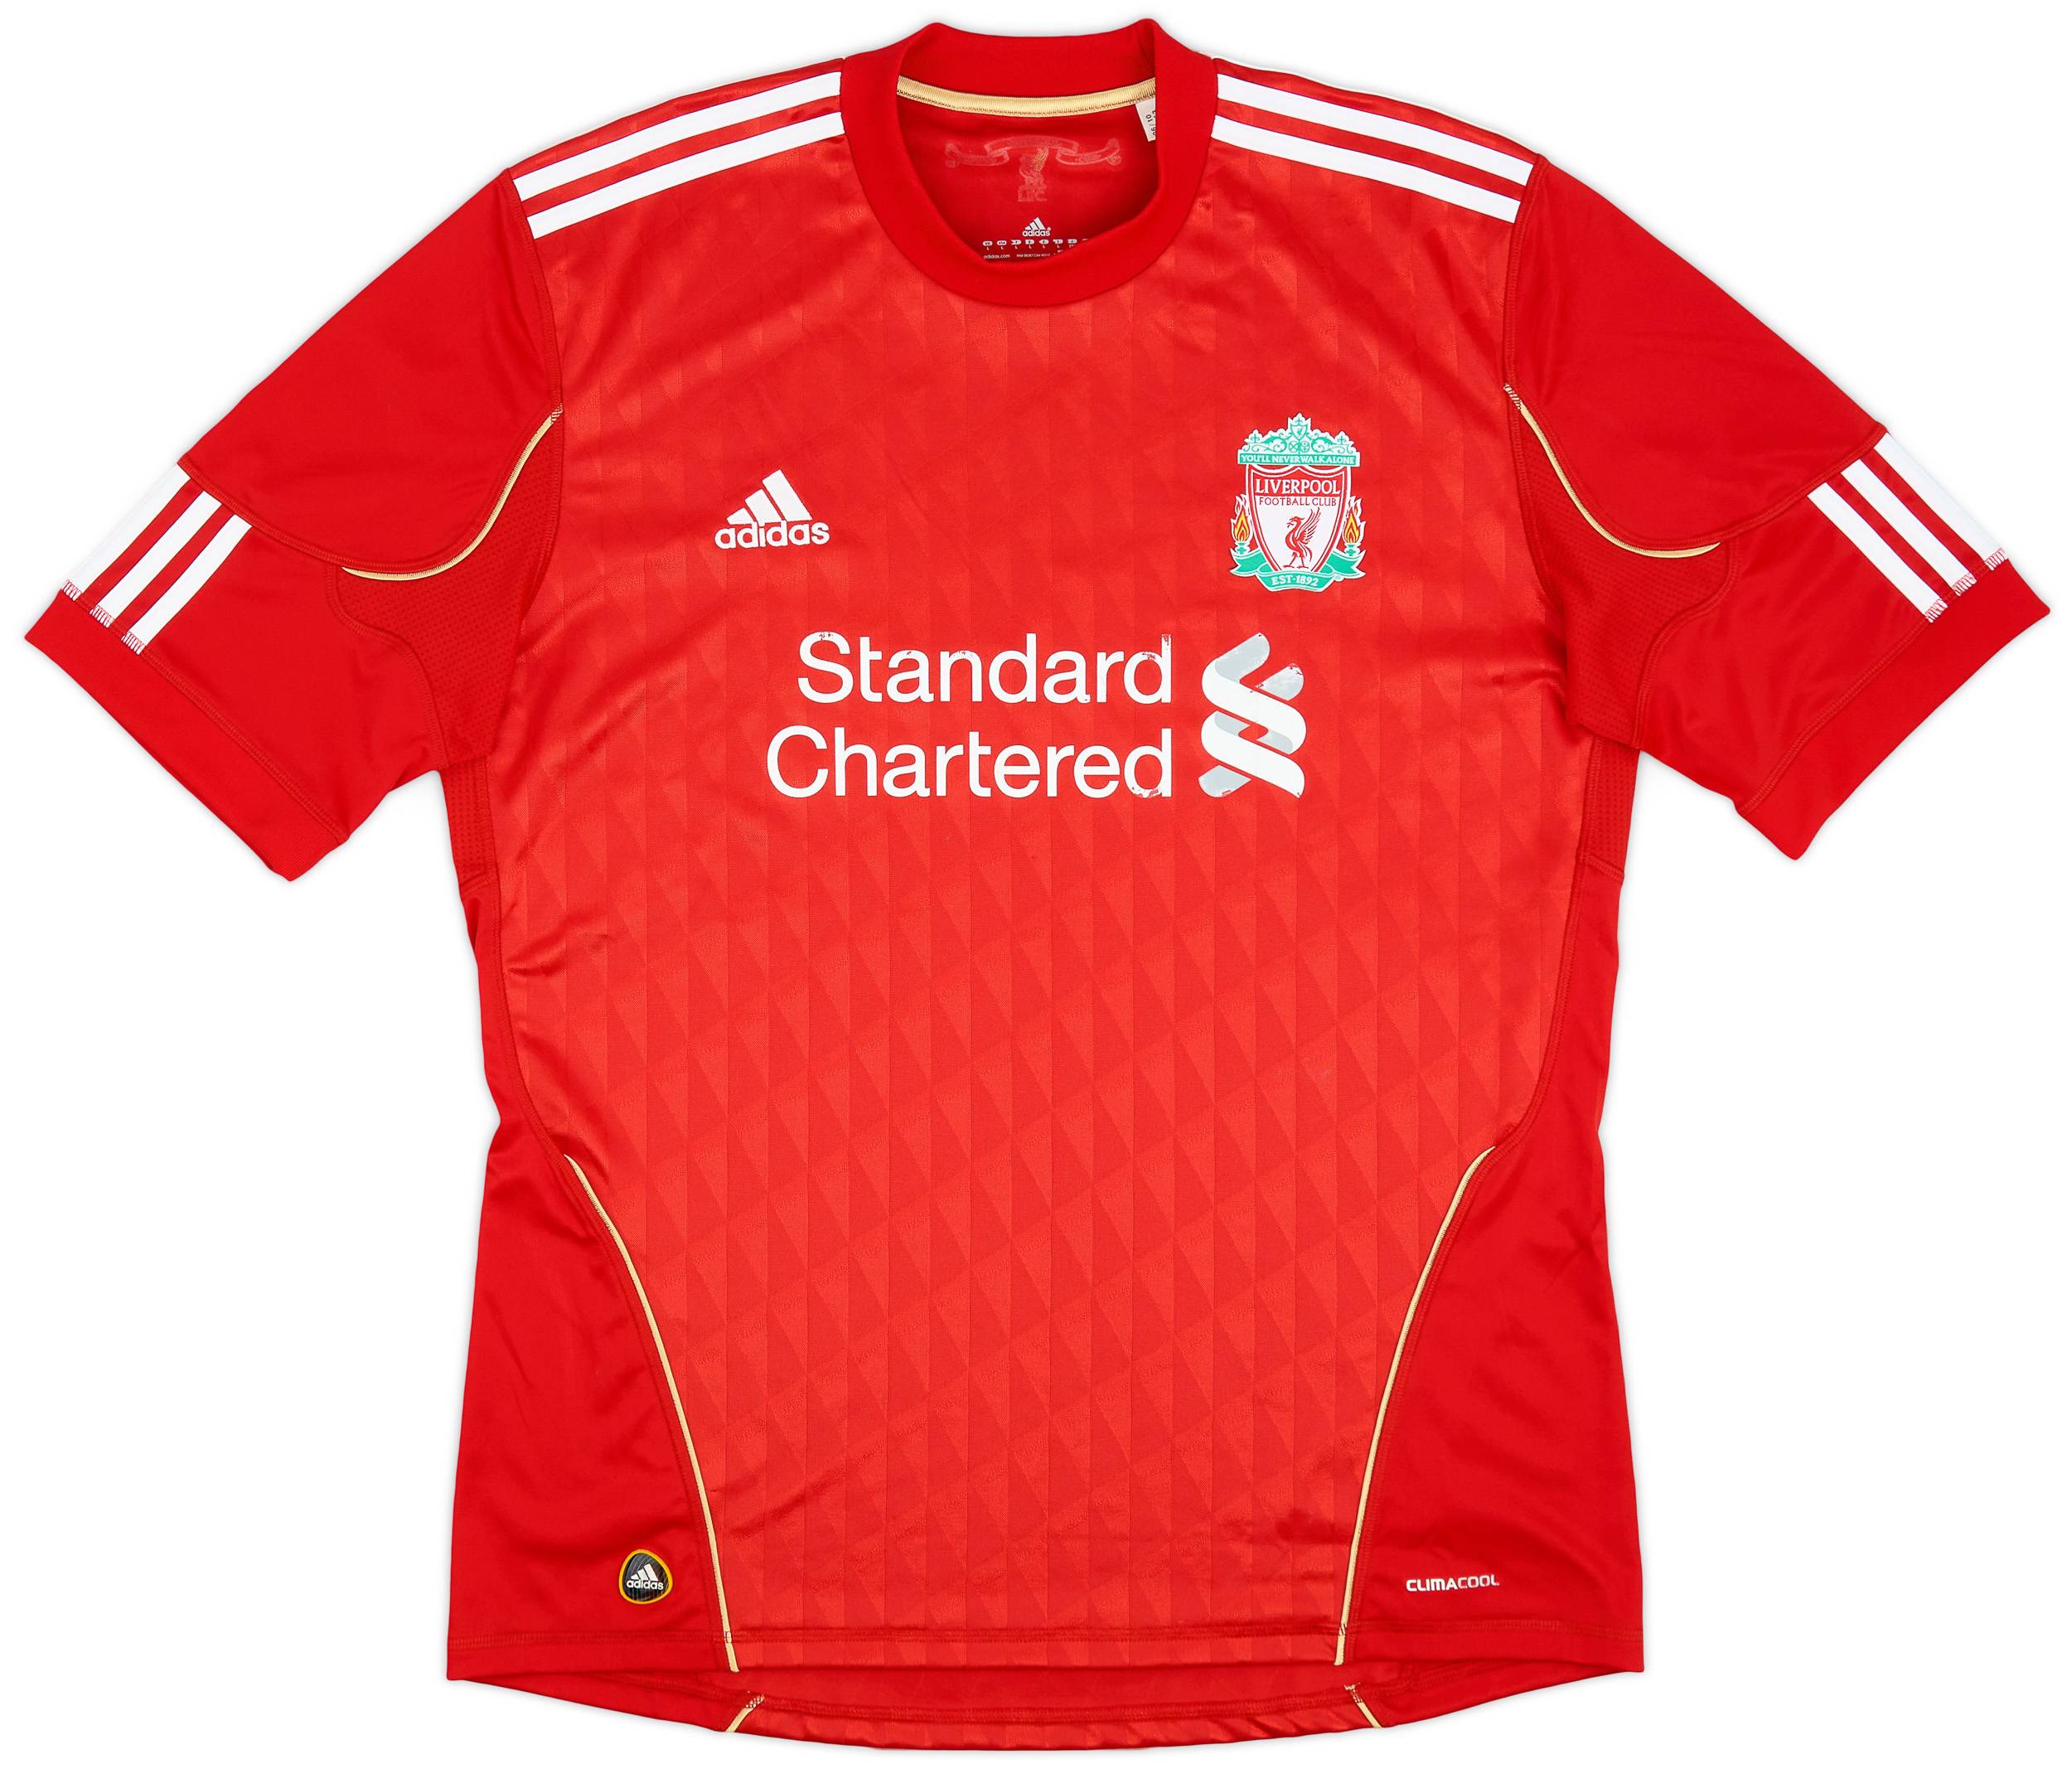 2010-12 Liverpool Home Shirt - 6/10 - (L)